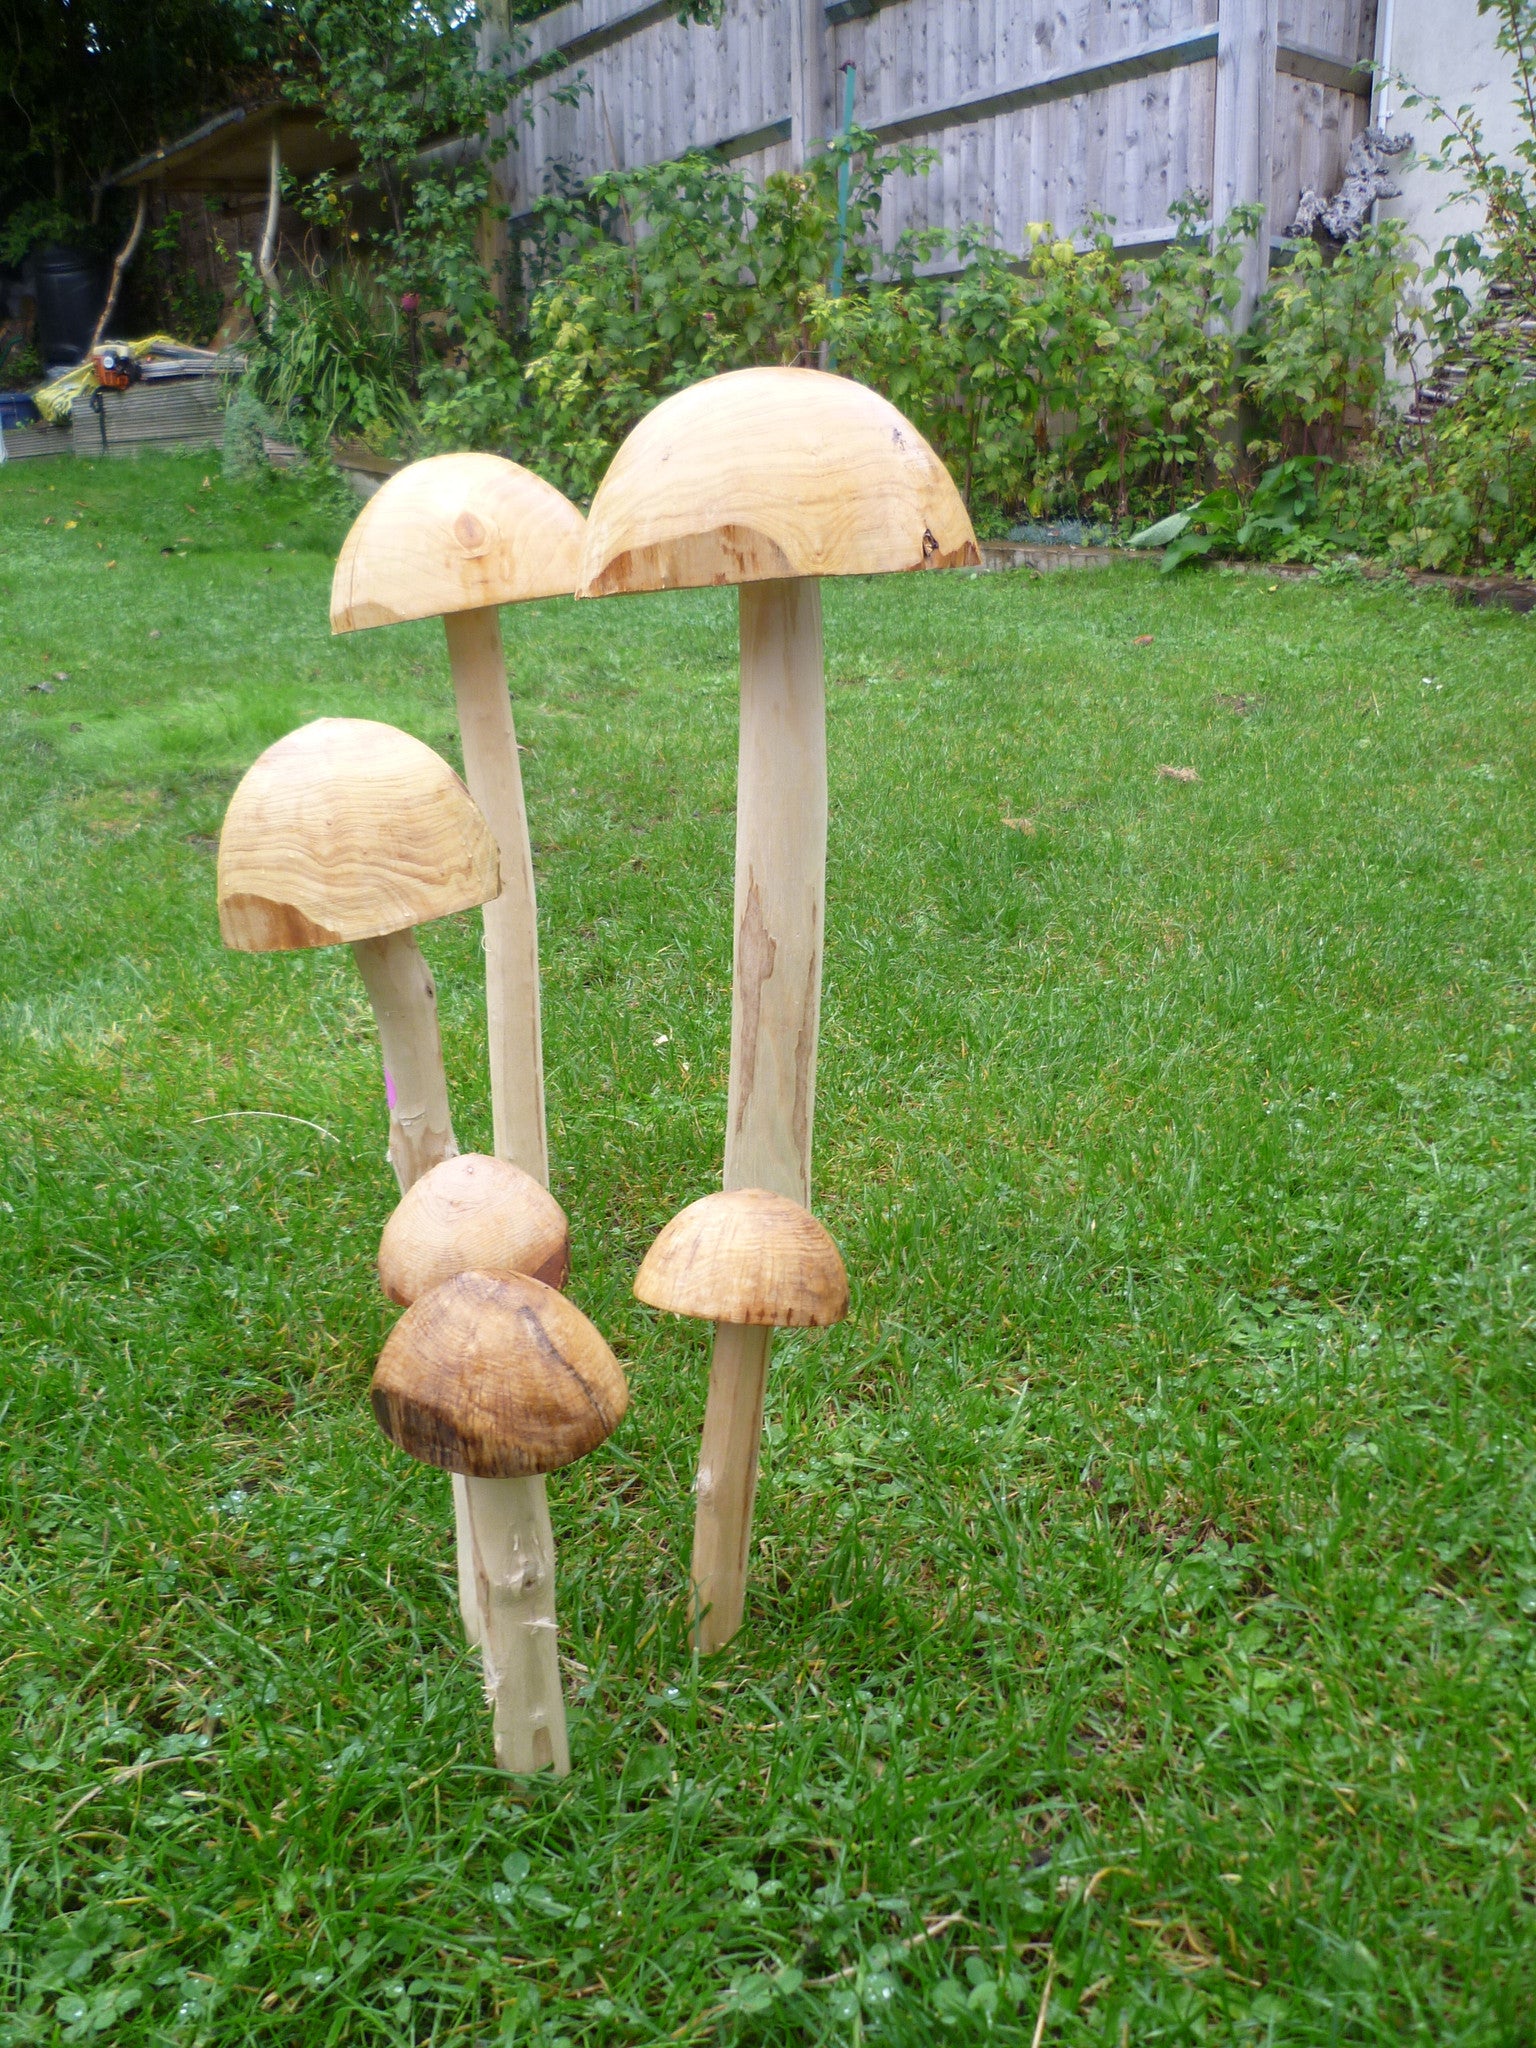 Large Wooden Garden Mushroom Toadstool Welsh Love Spoons By Adam